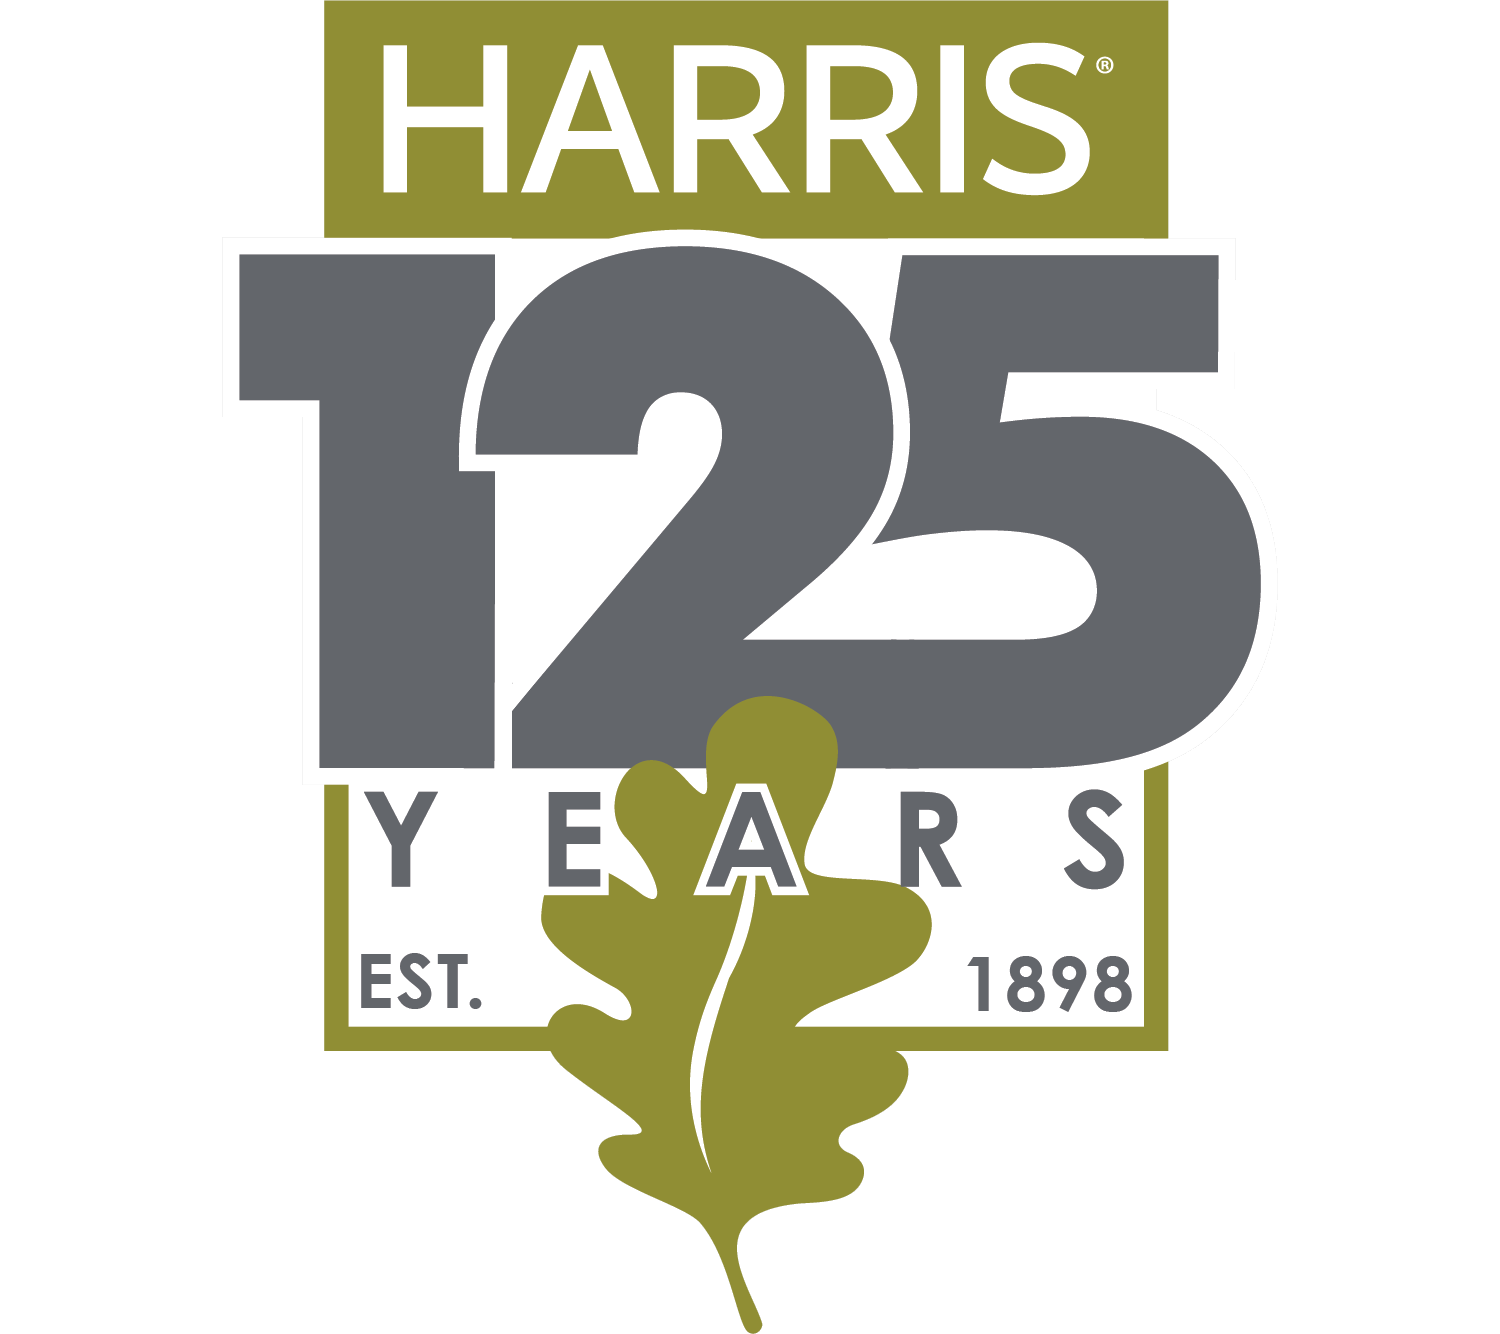 Harris - 125 Years - Est. 1898